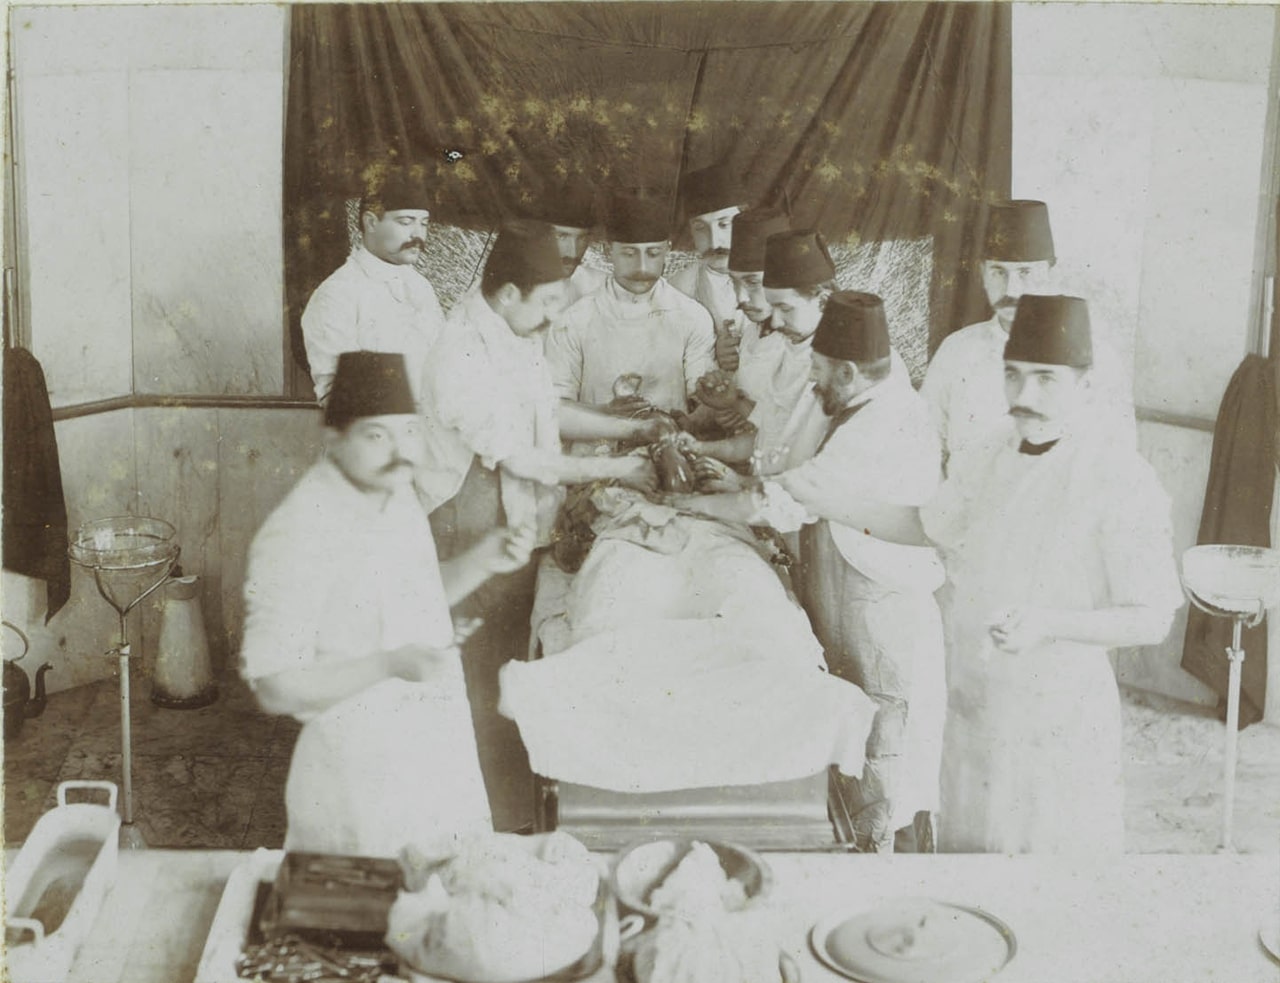 Ottoman health system